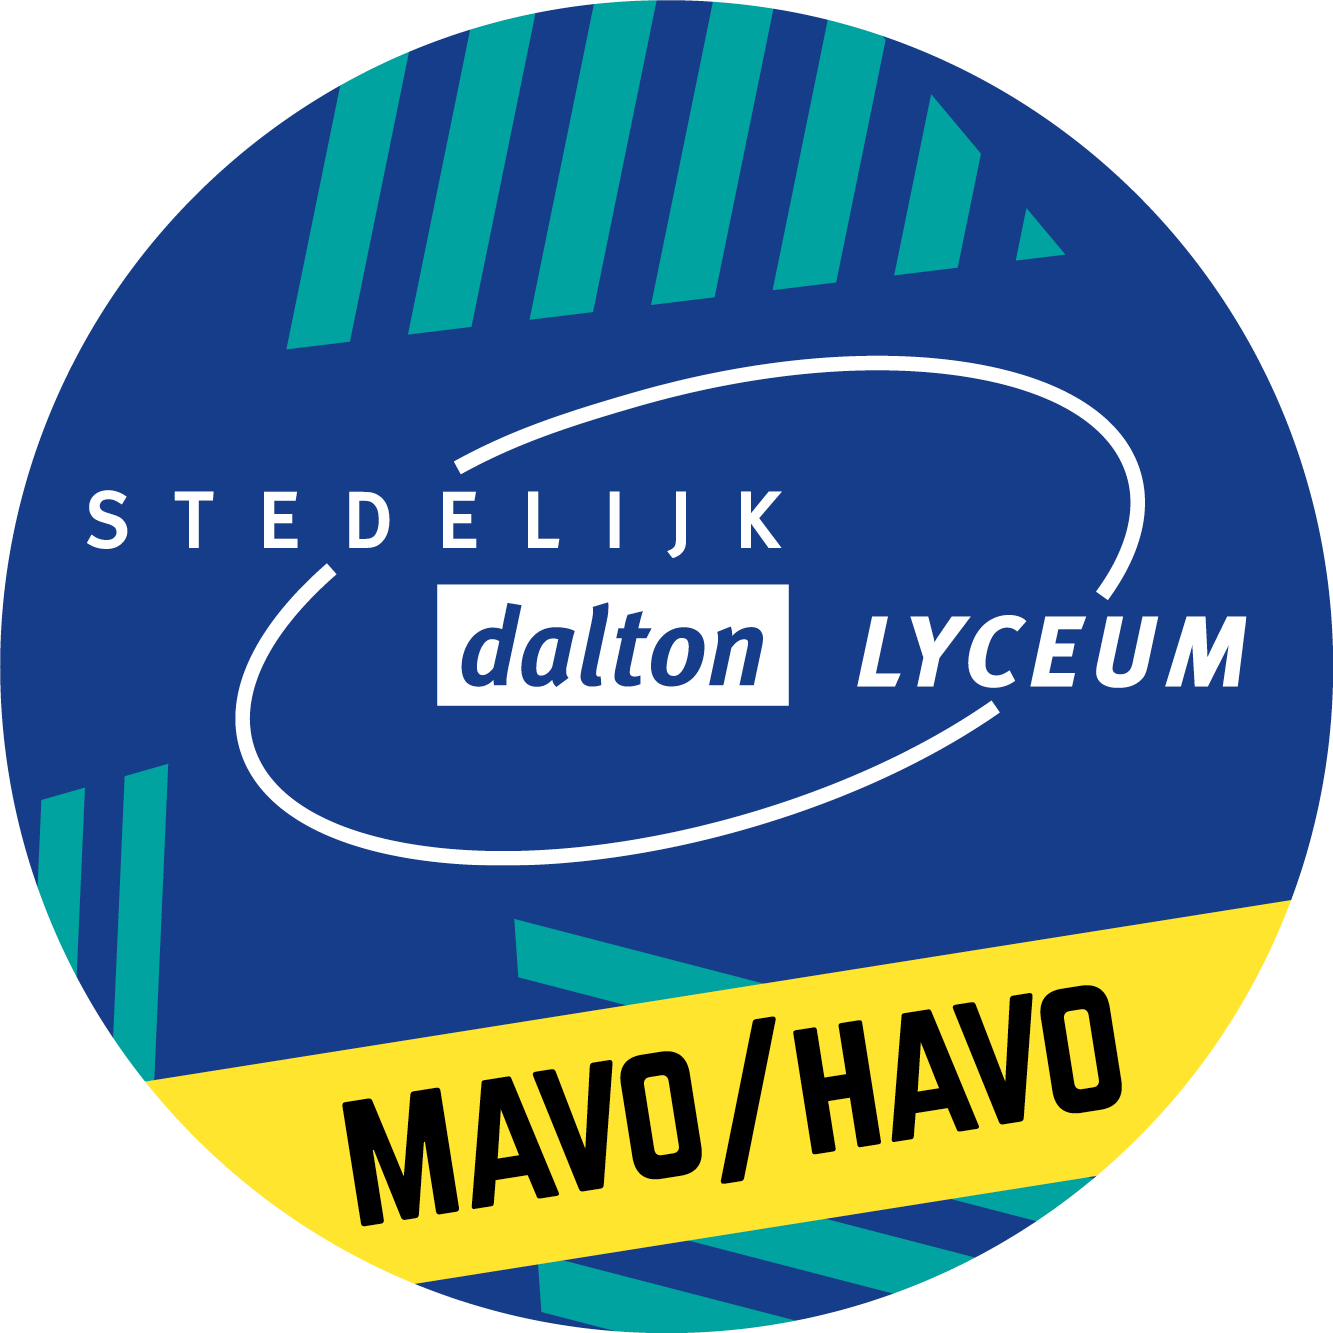 Stedelijk Dalton Lyceum MAVO & HAVO